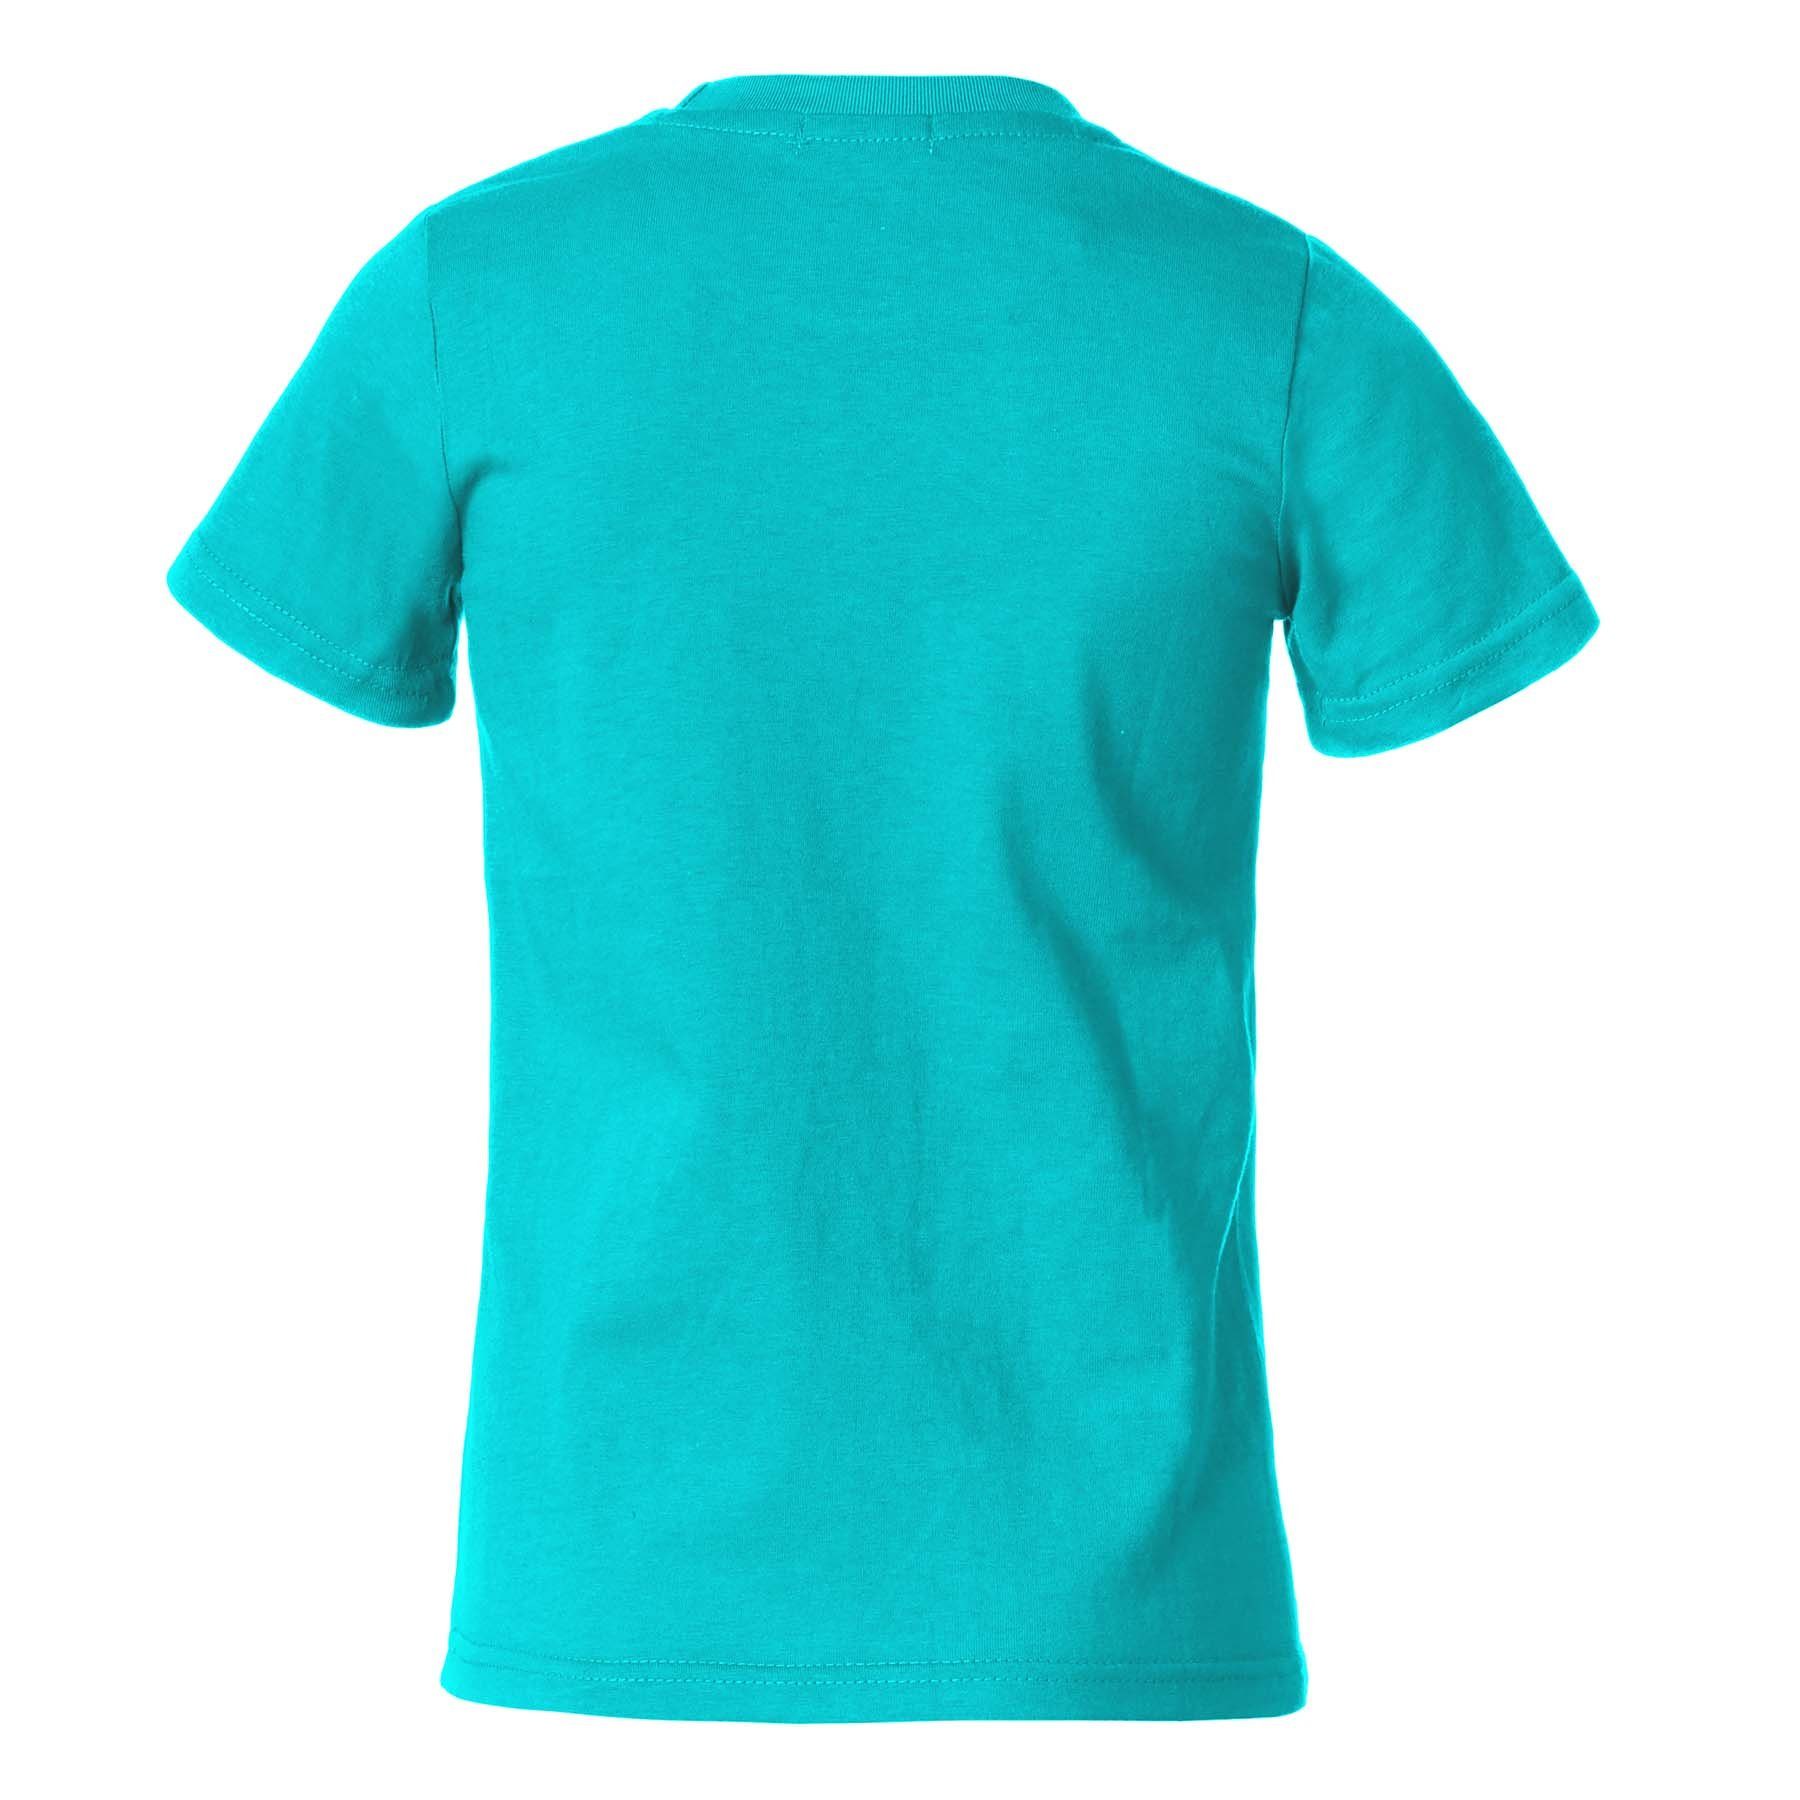 dressforfun Rundhals T-Shirt türkis T-Shirt Männer